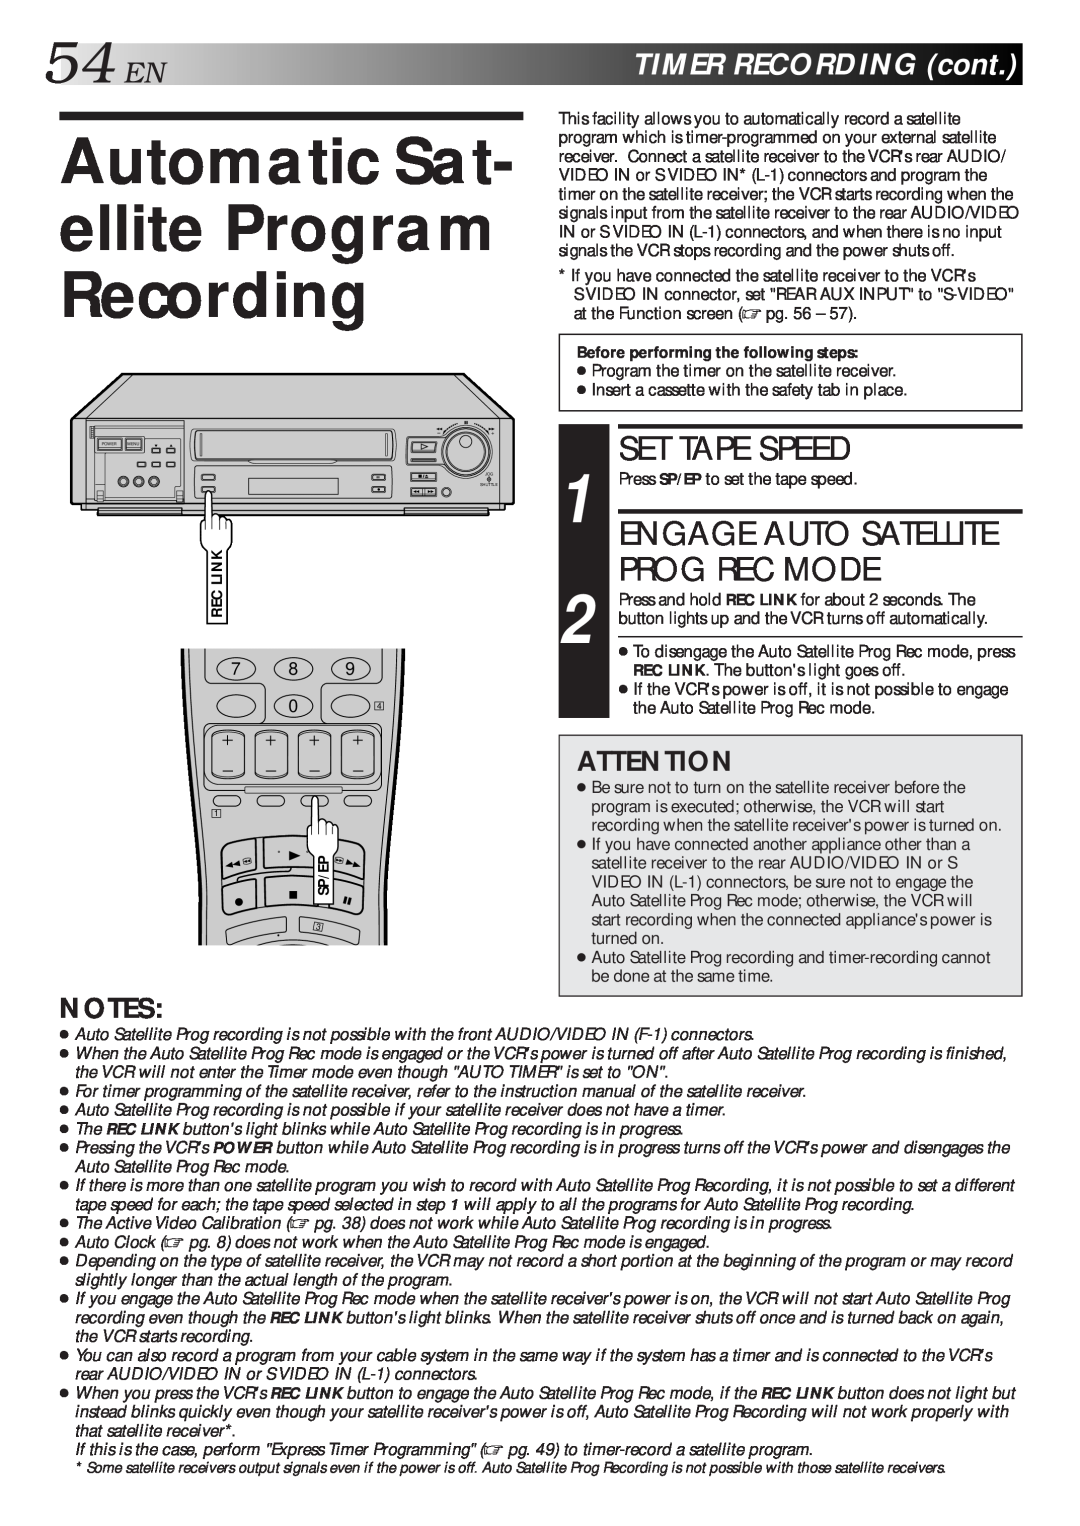 JVC HR-S7500U manual Automatic Sat- ellite Program Recording, Prog Rec Mode, 54ENTIMERRECORDINGcont, Engage Auto Satellite 